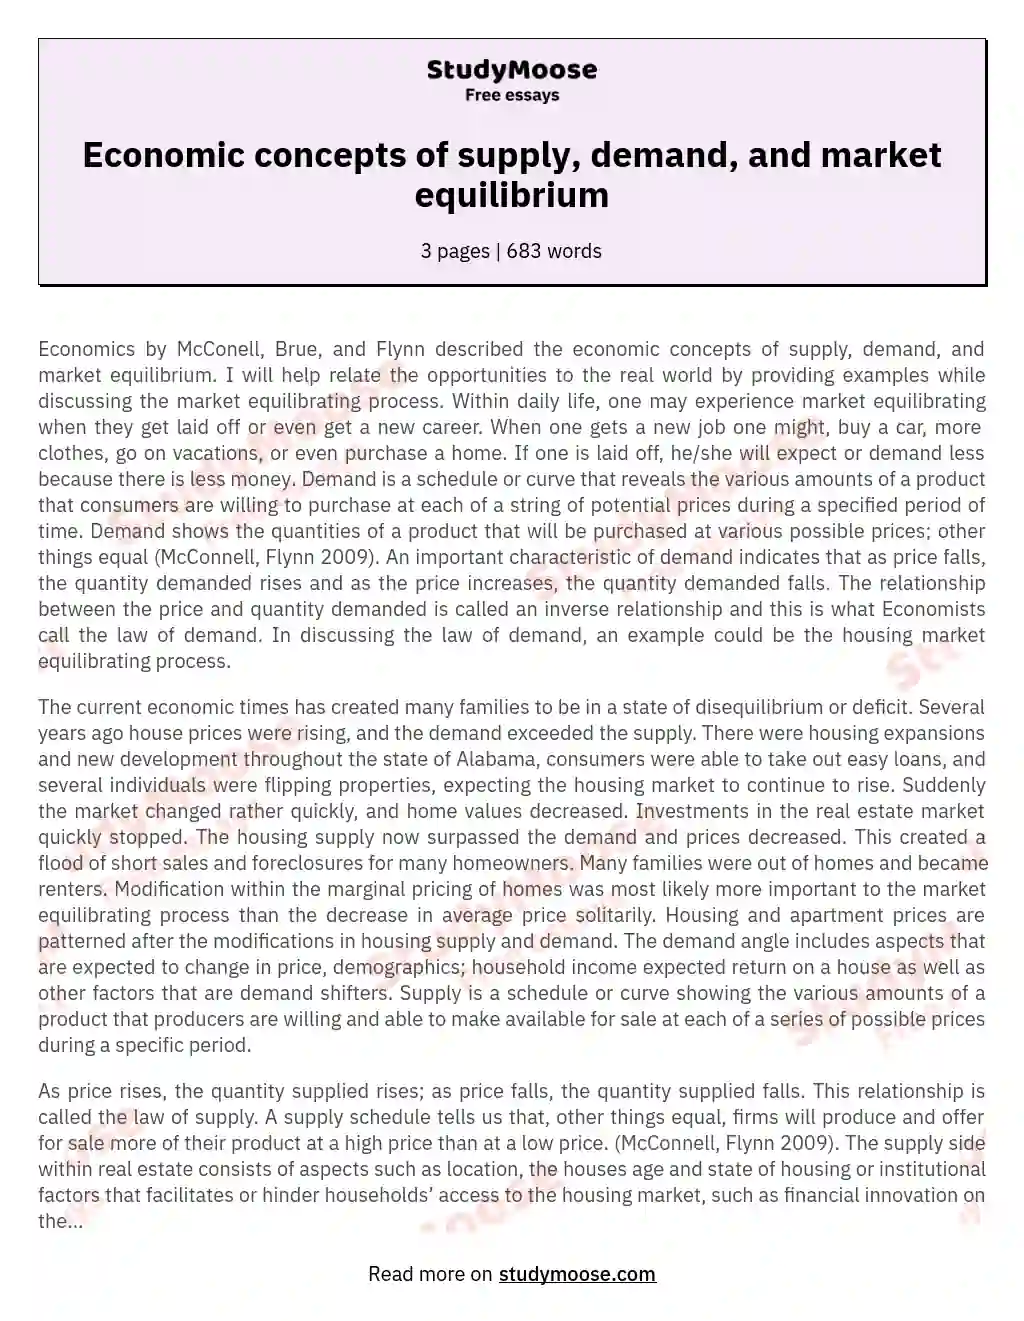 Economic concepts of supply, demand, and market equilibrium essay